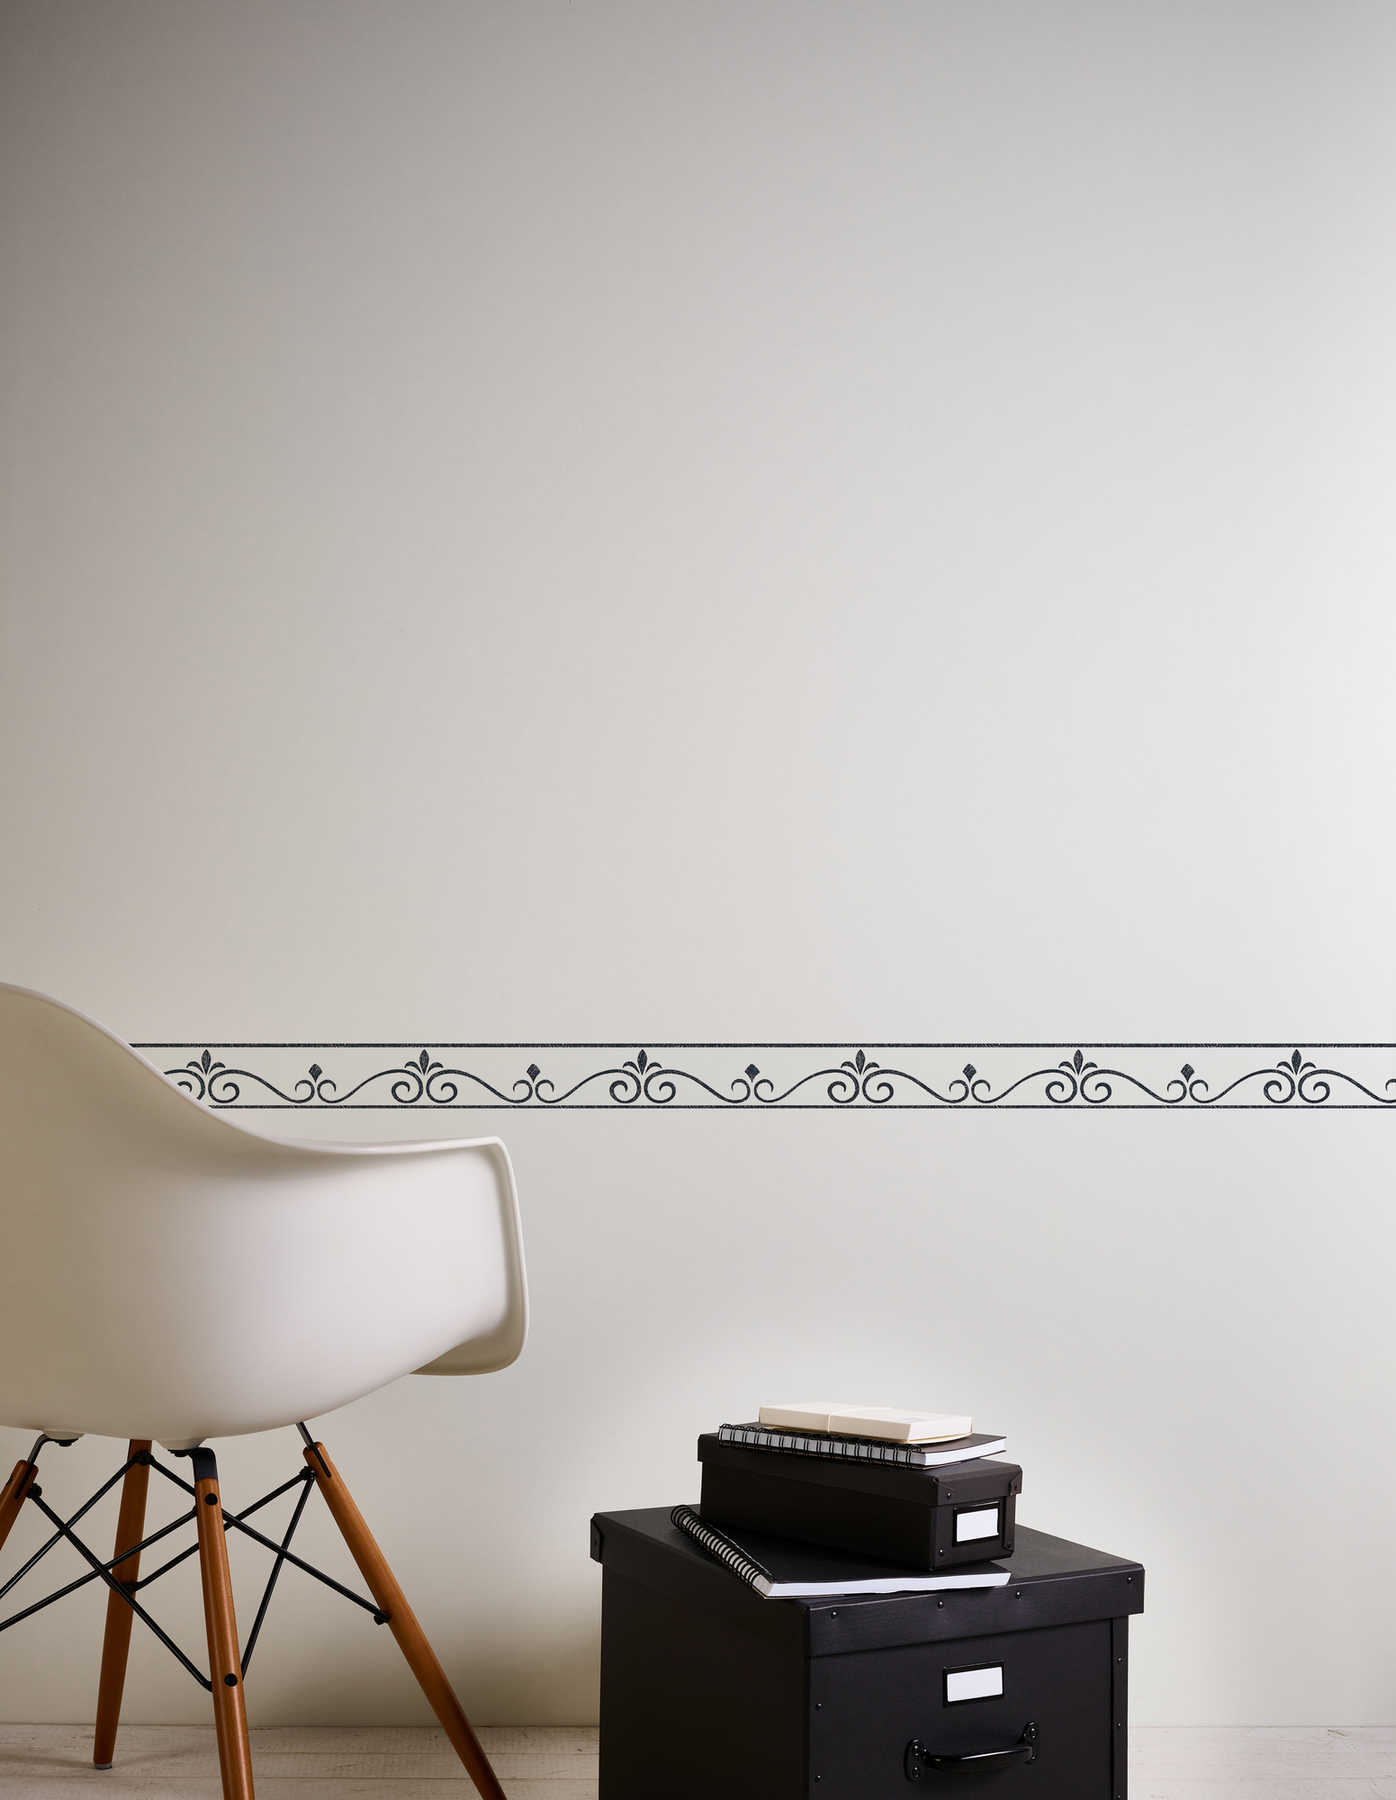             Black and white border with filigree decorative pattern
        